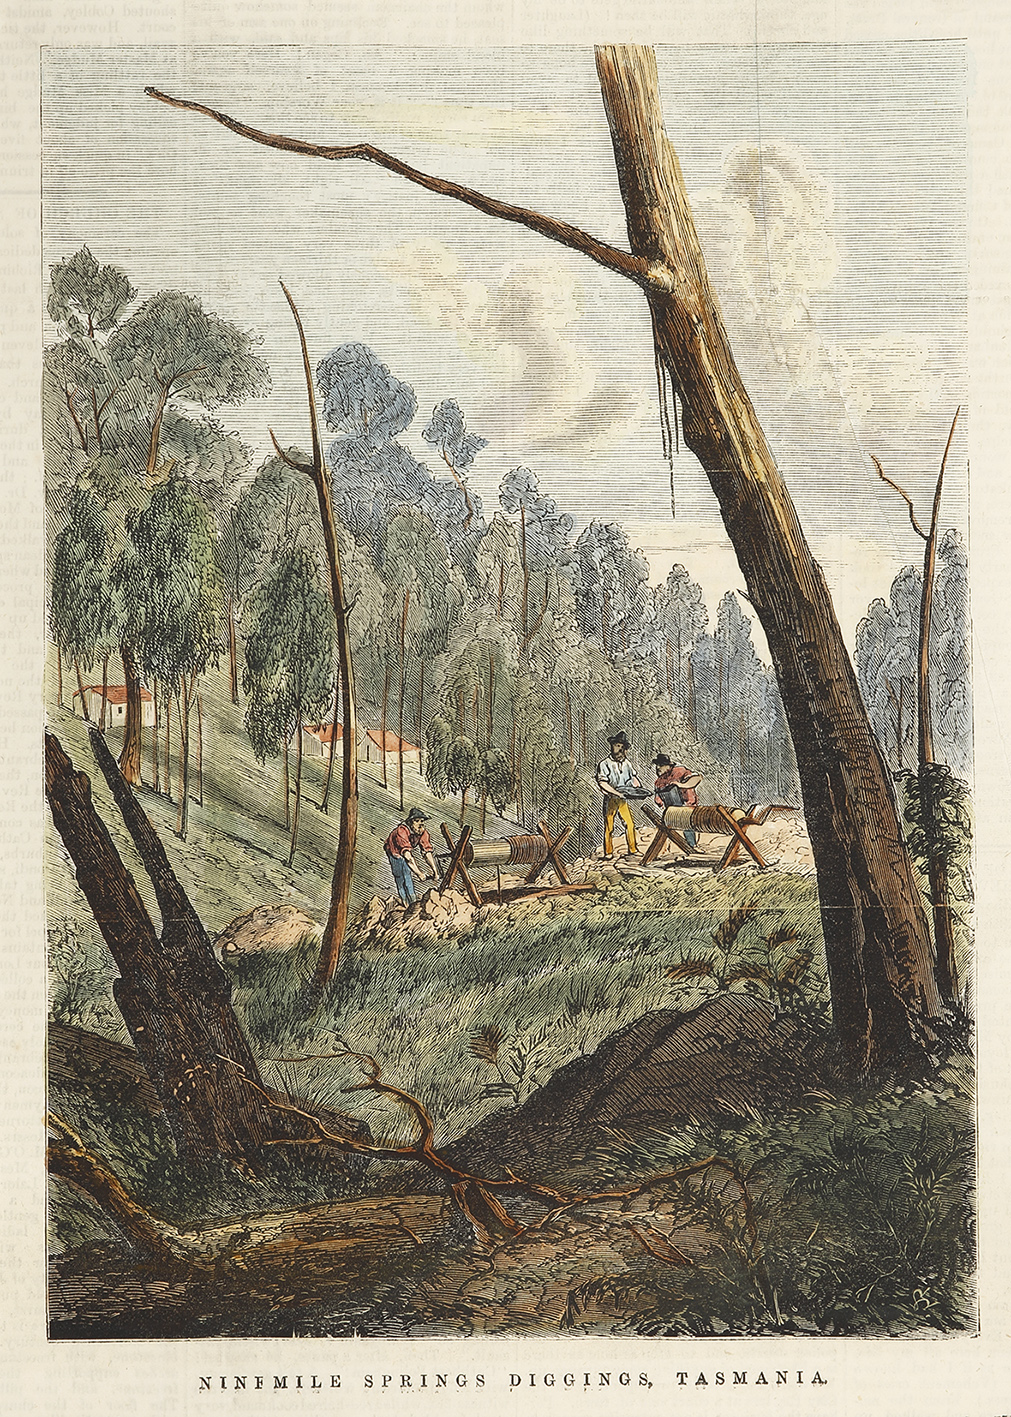 Ninemile Springs Diggings, Tasmania. - Antique View from 1870